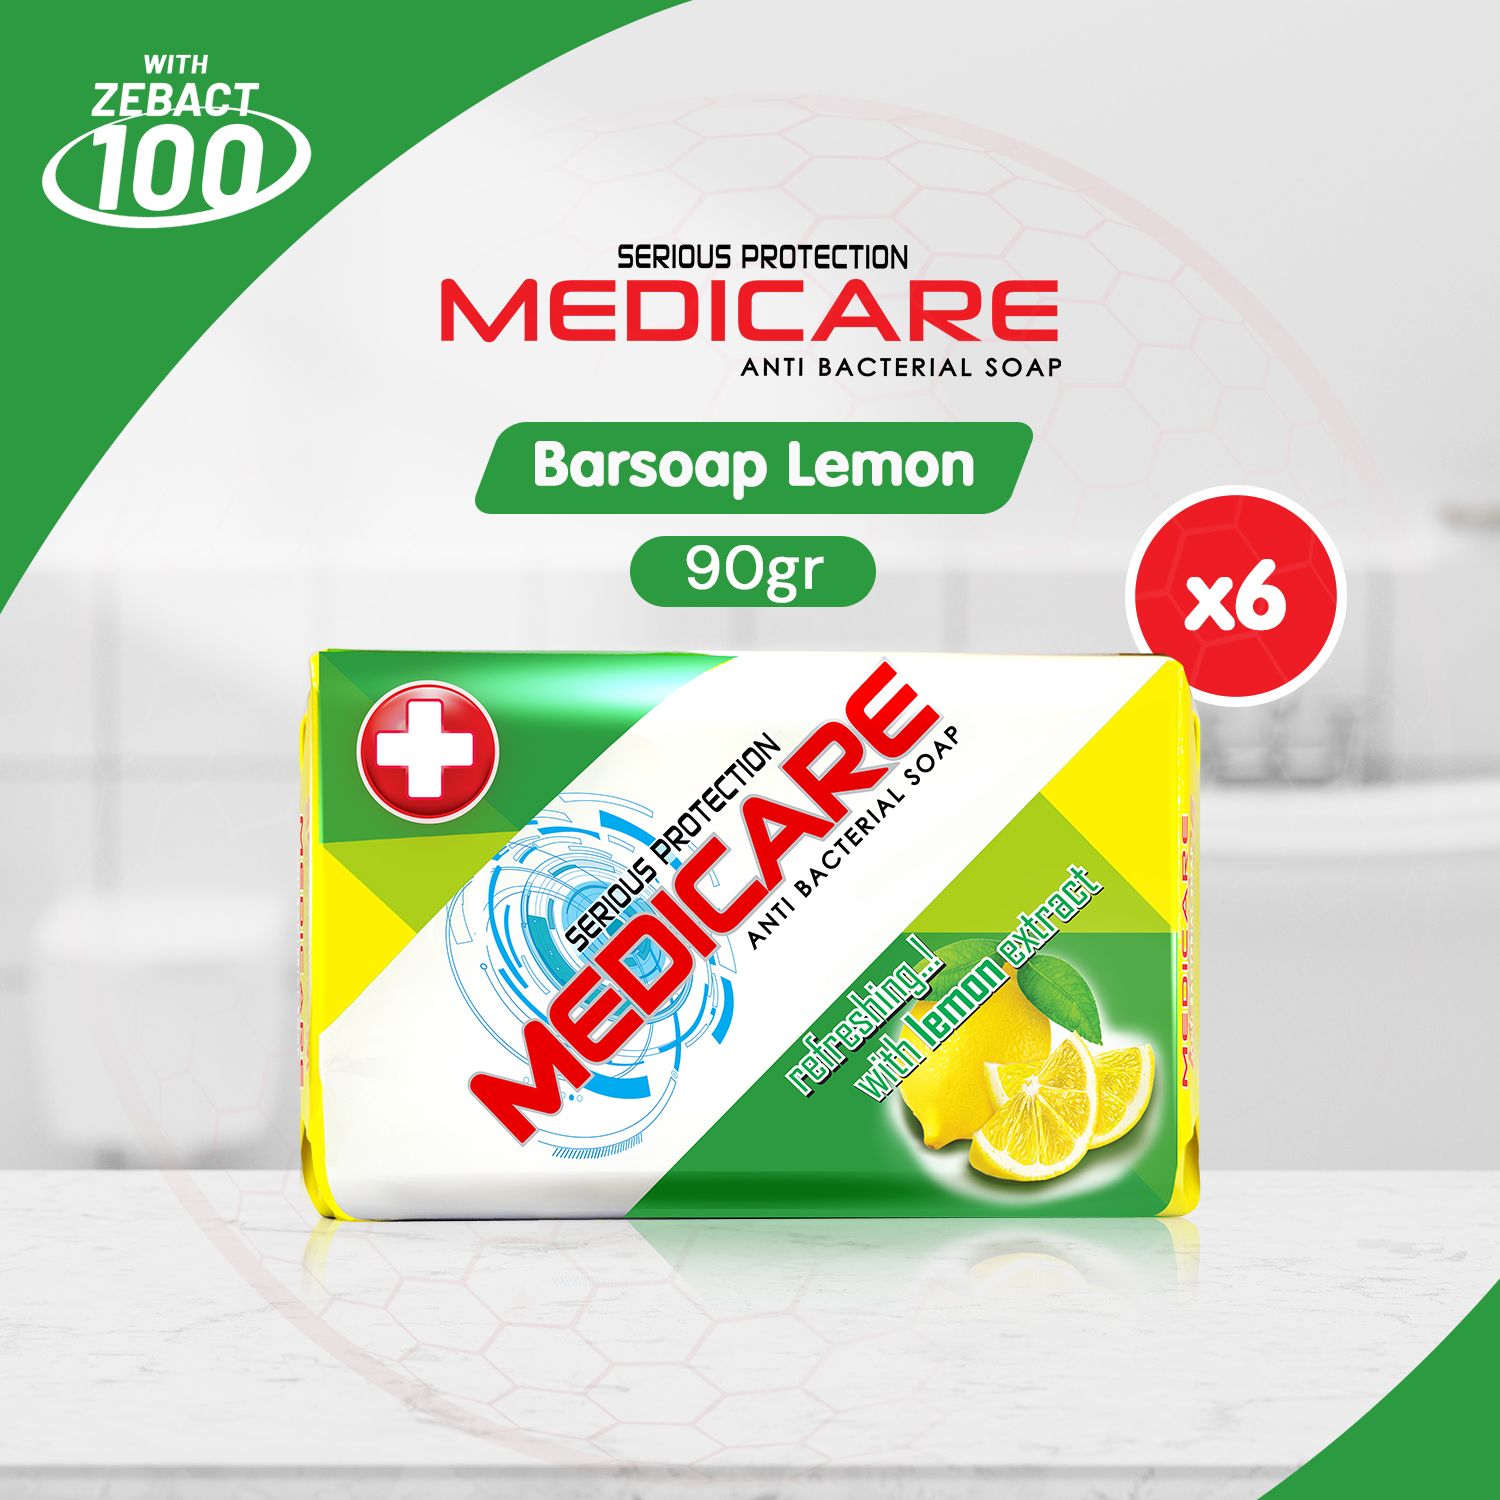 MEDICARE Sabun Antibakteri Lemon 90g (6 pcs) - 1